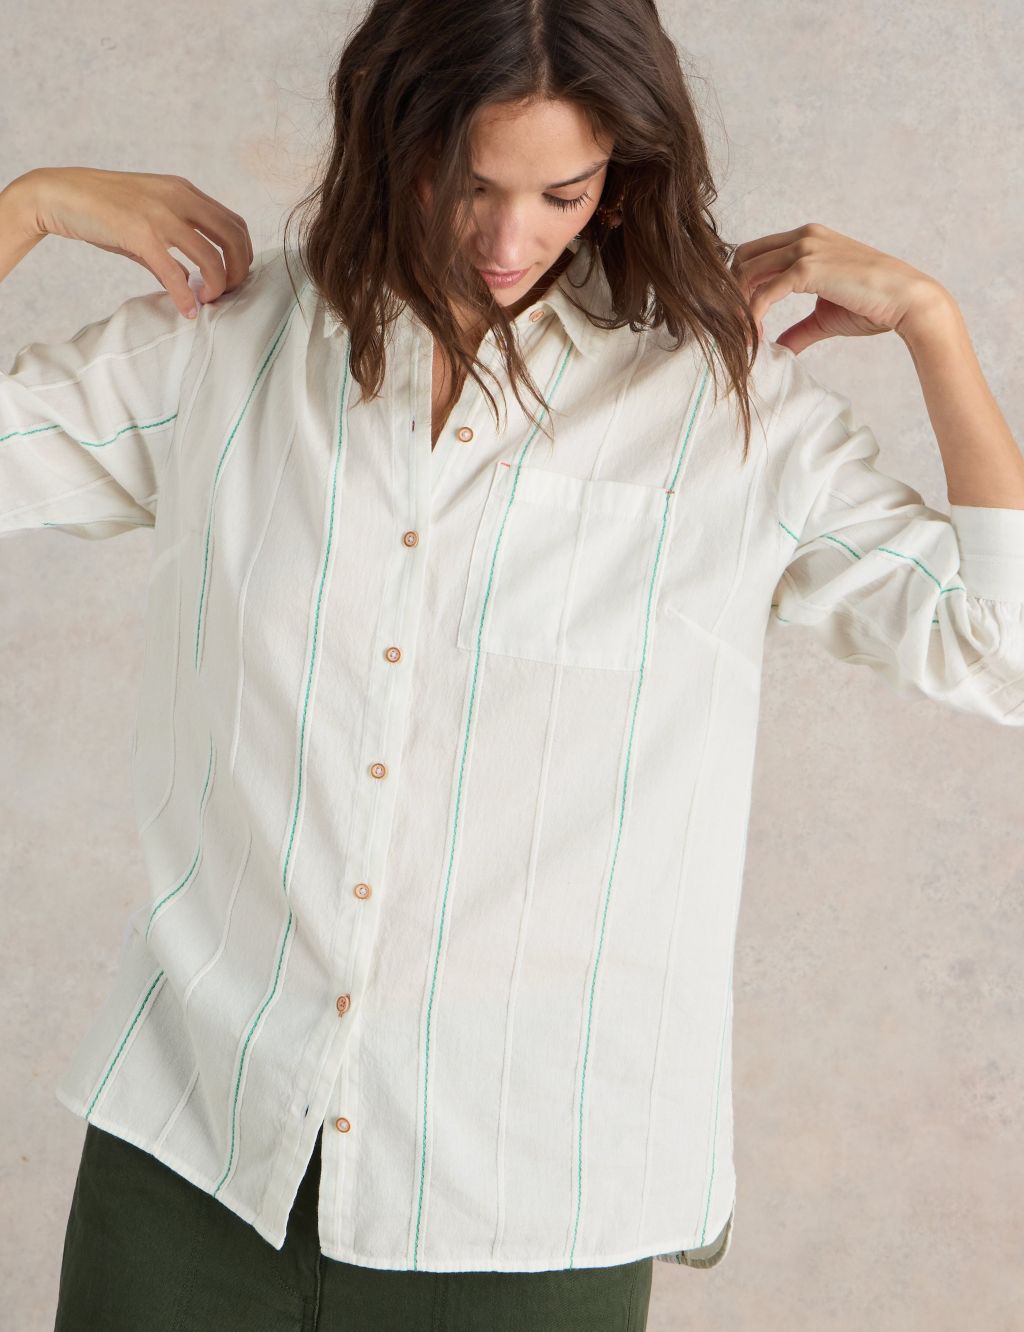 Pure Cotton Striped Collared Longline Shirt